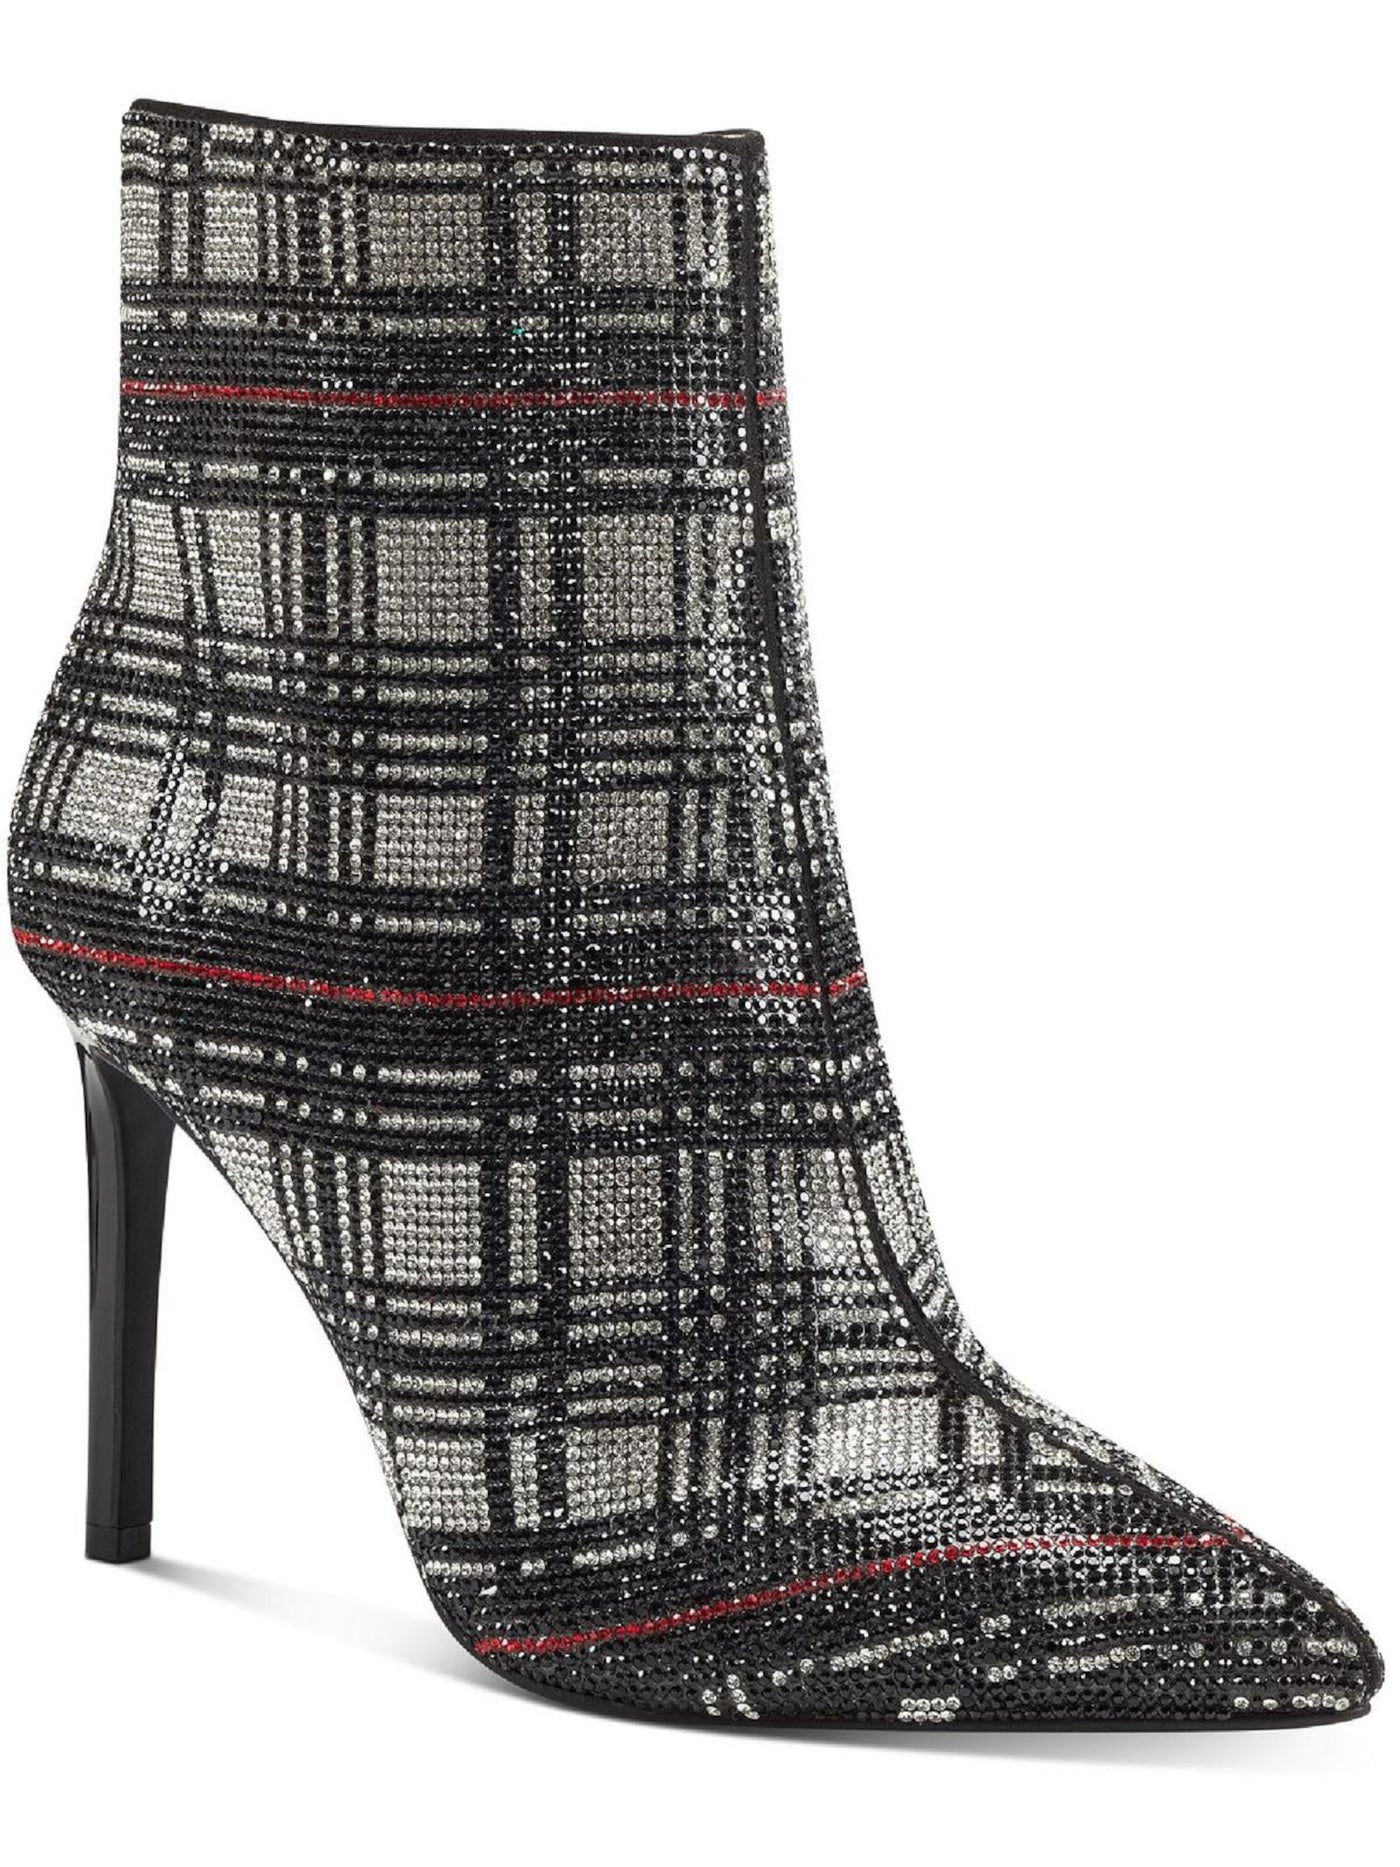 INC Womens Black Plaid Rhinestone Comfort Reisa Pointed Toe Stiletto Zip-Up Dress Booties 5.5 M